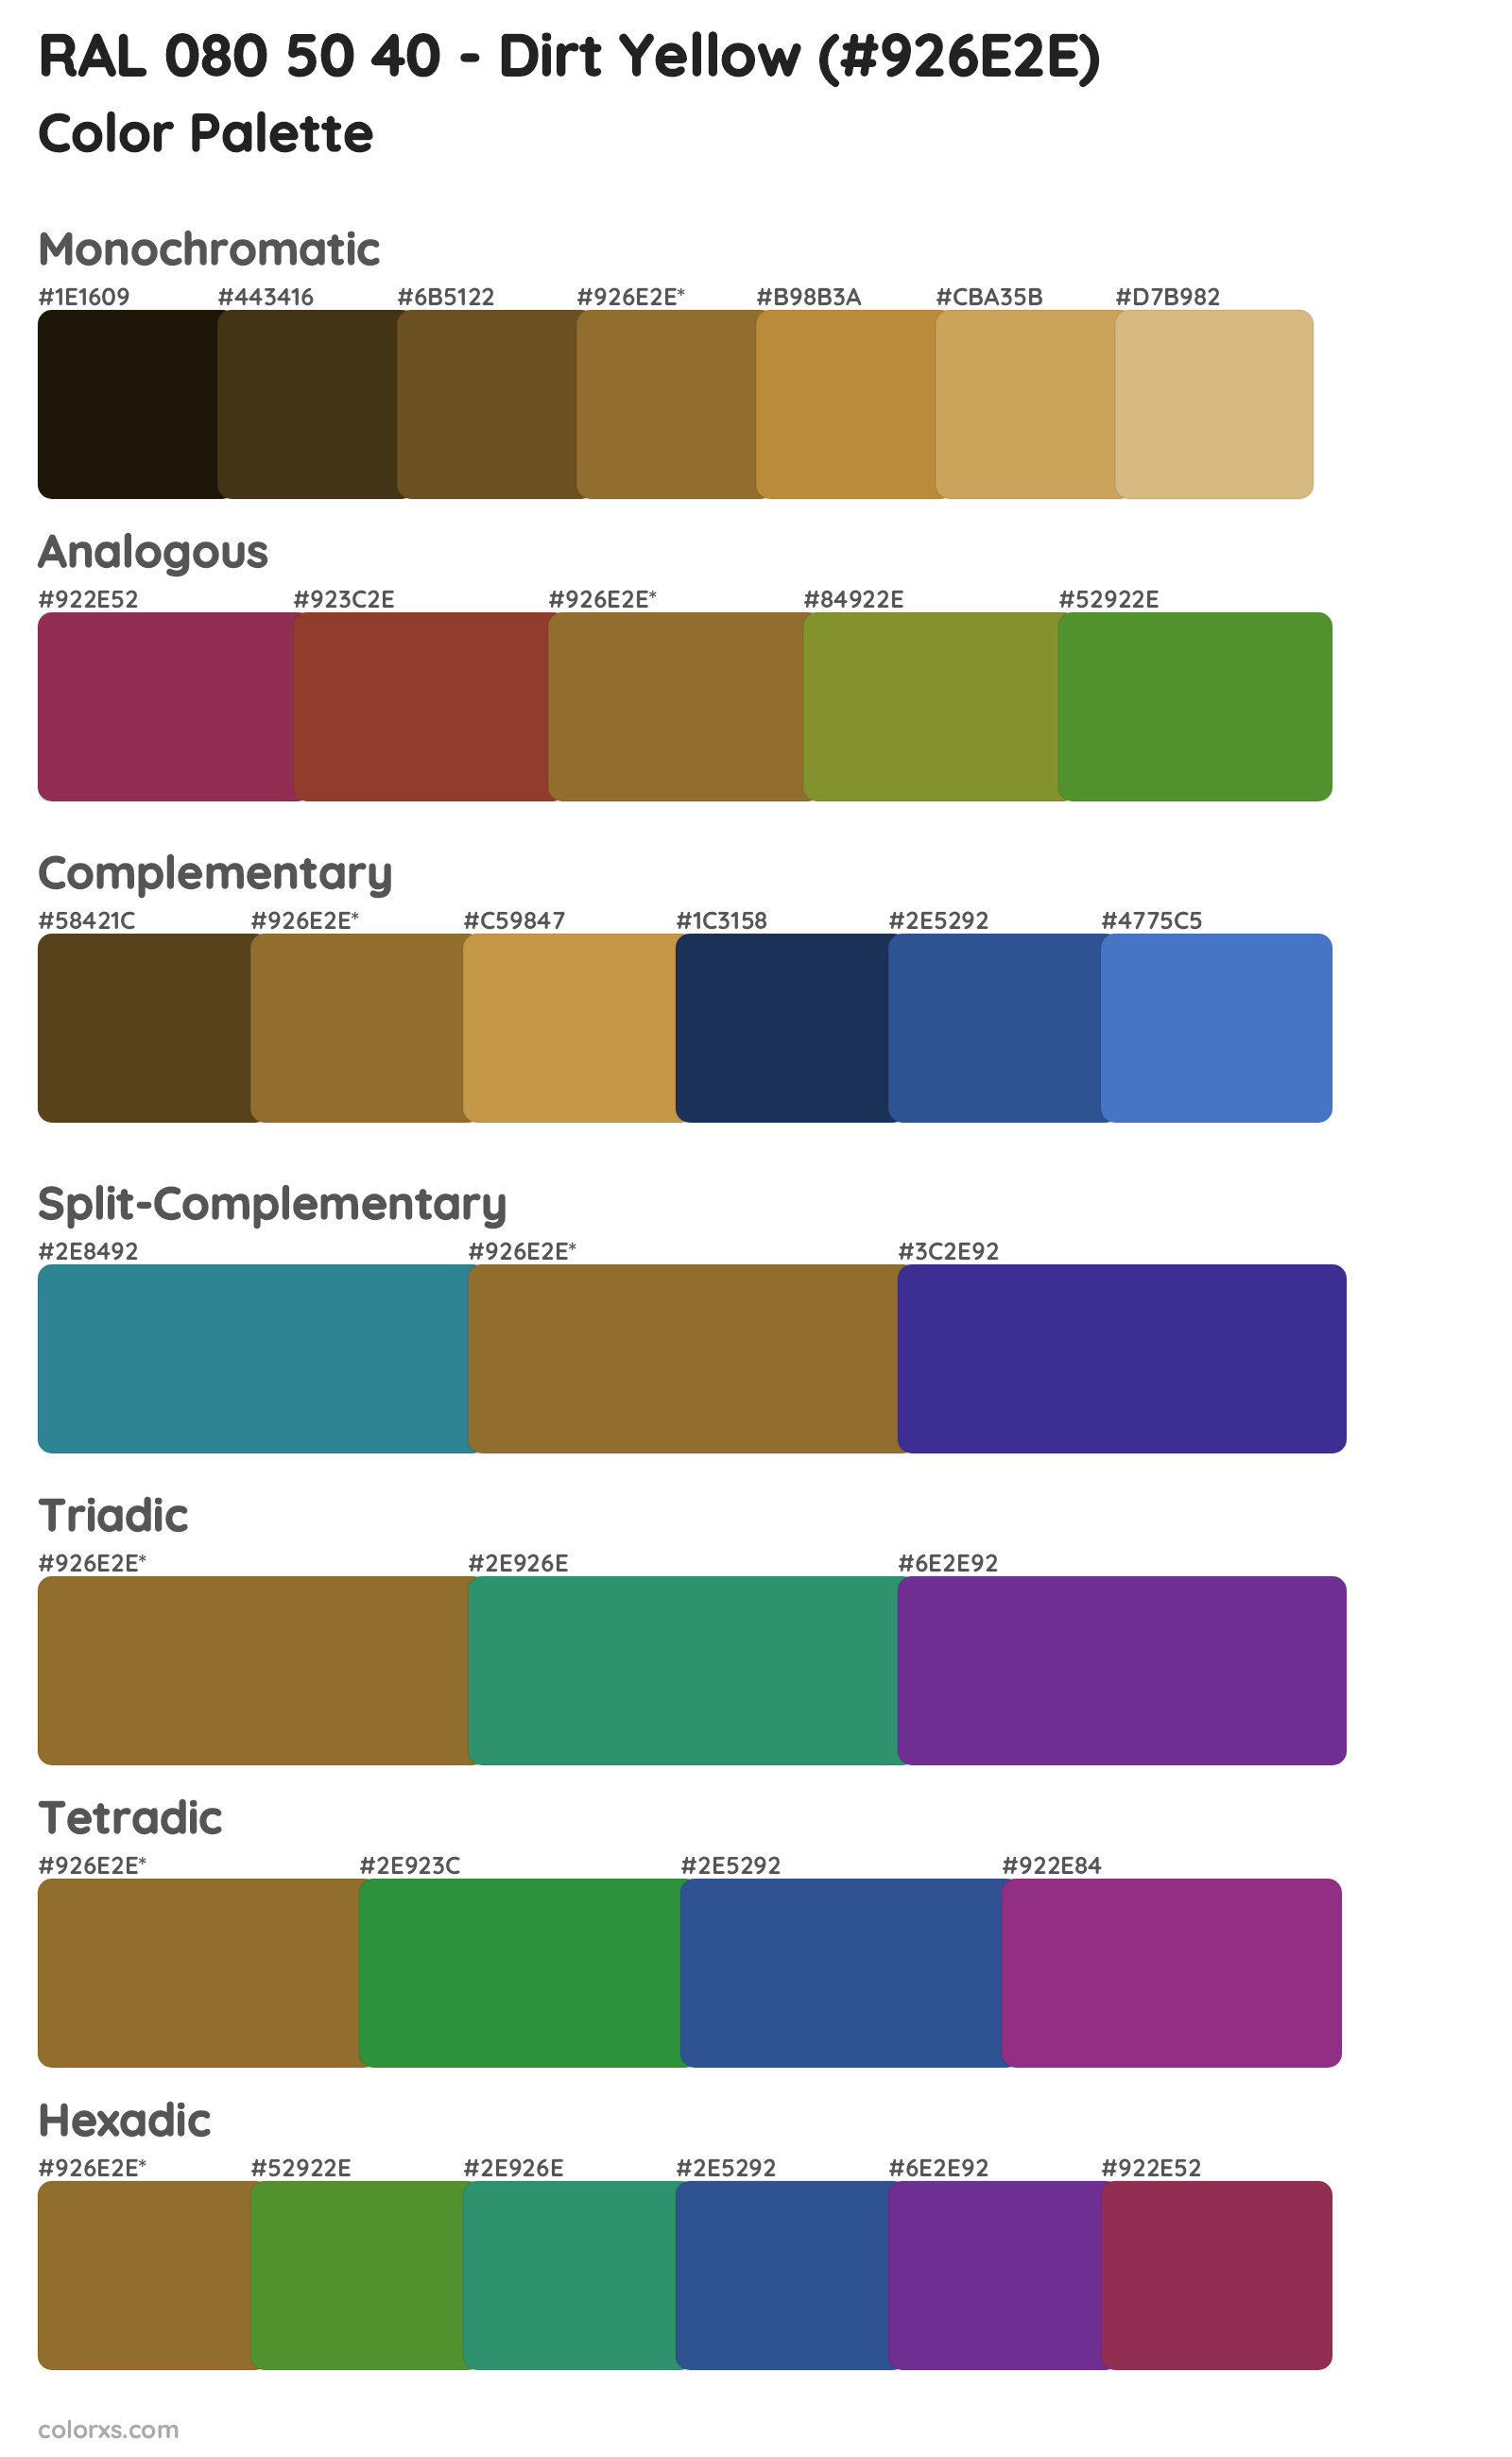 RAL 080 50 40 - Dirt Yellow Color Scheme Palettes